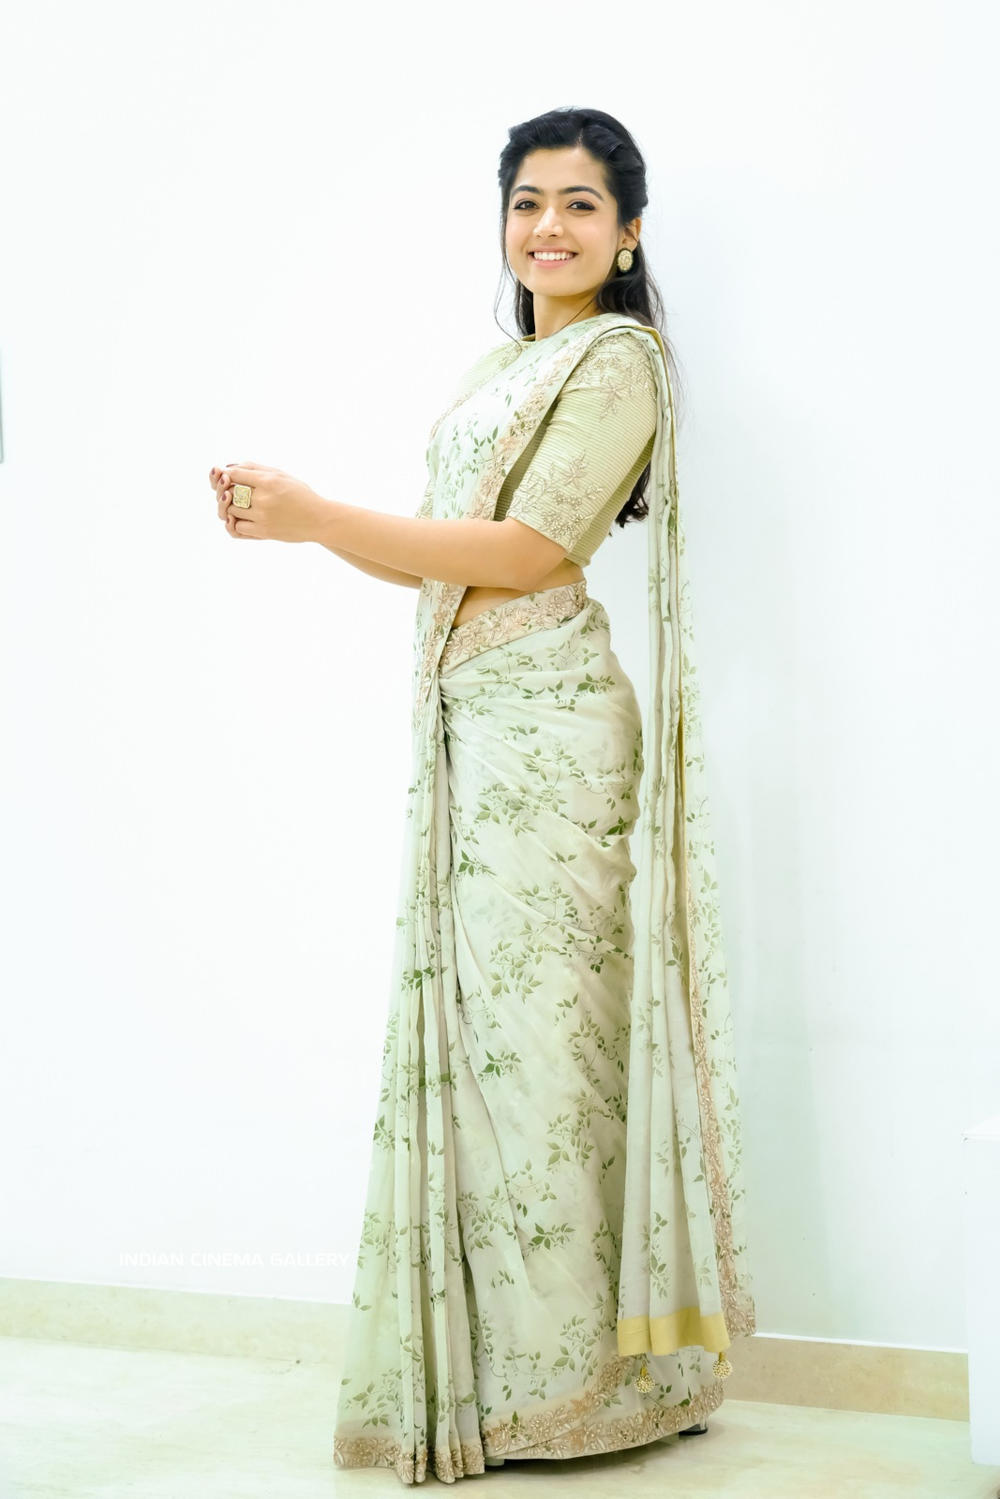 Rashmika-Mandanna-in-saree-dress-8.jpg